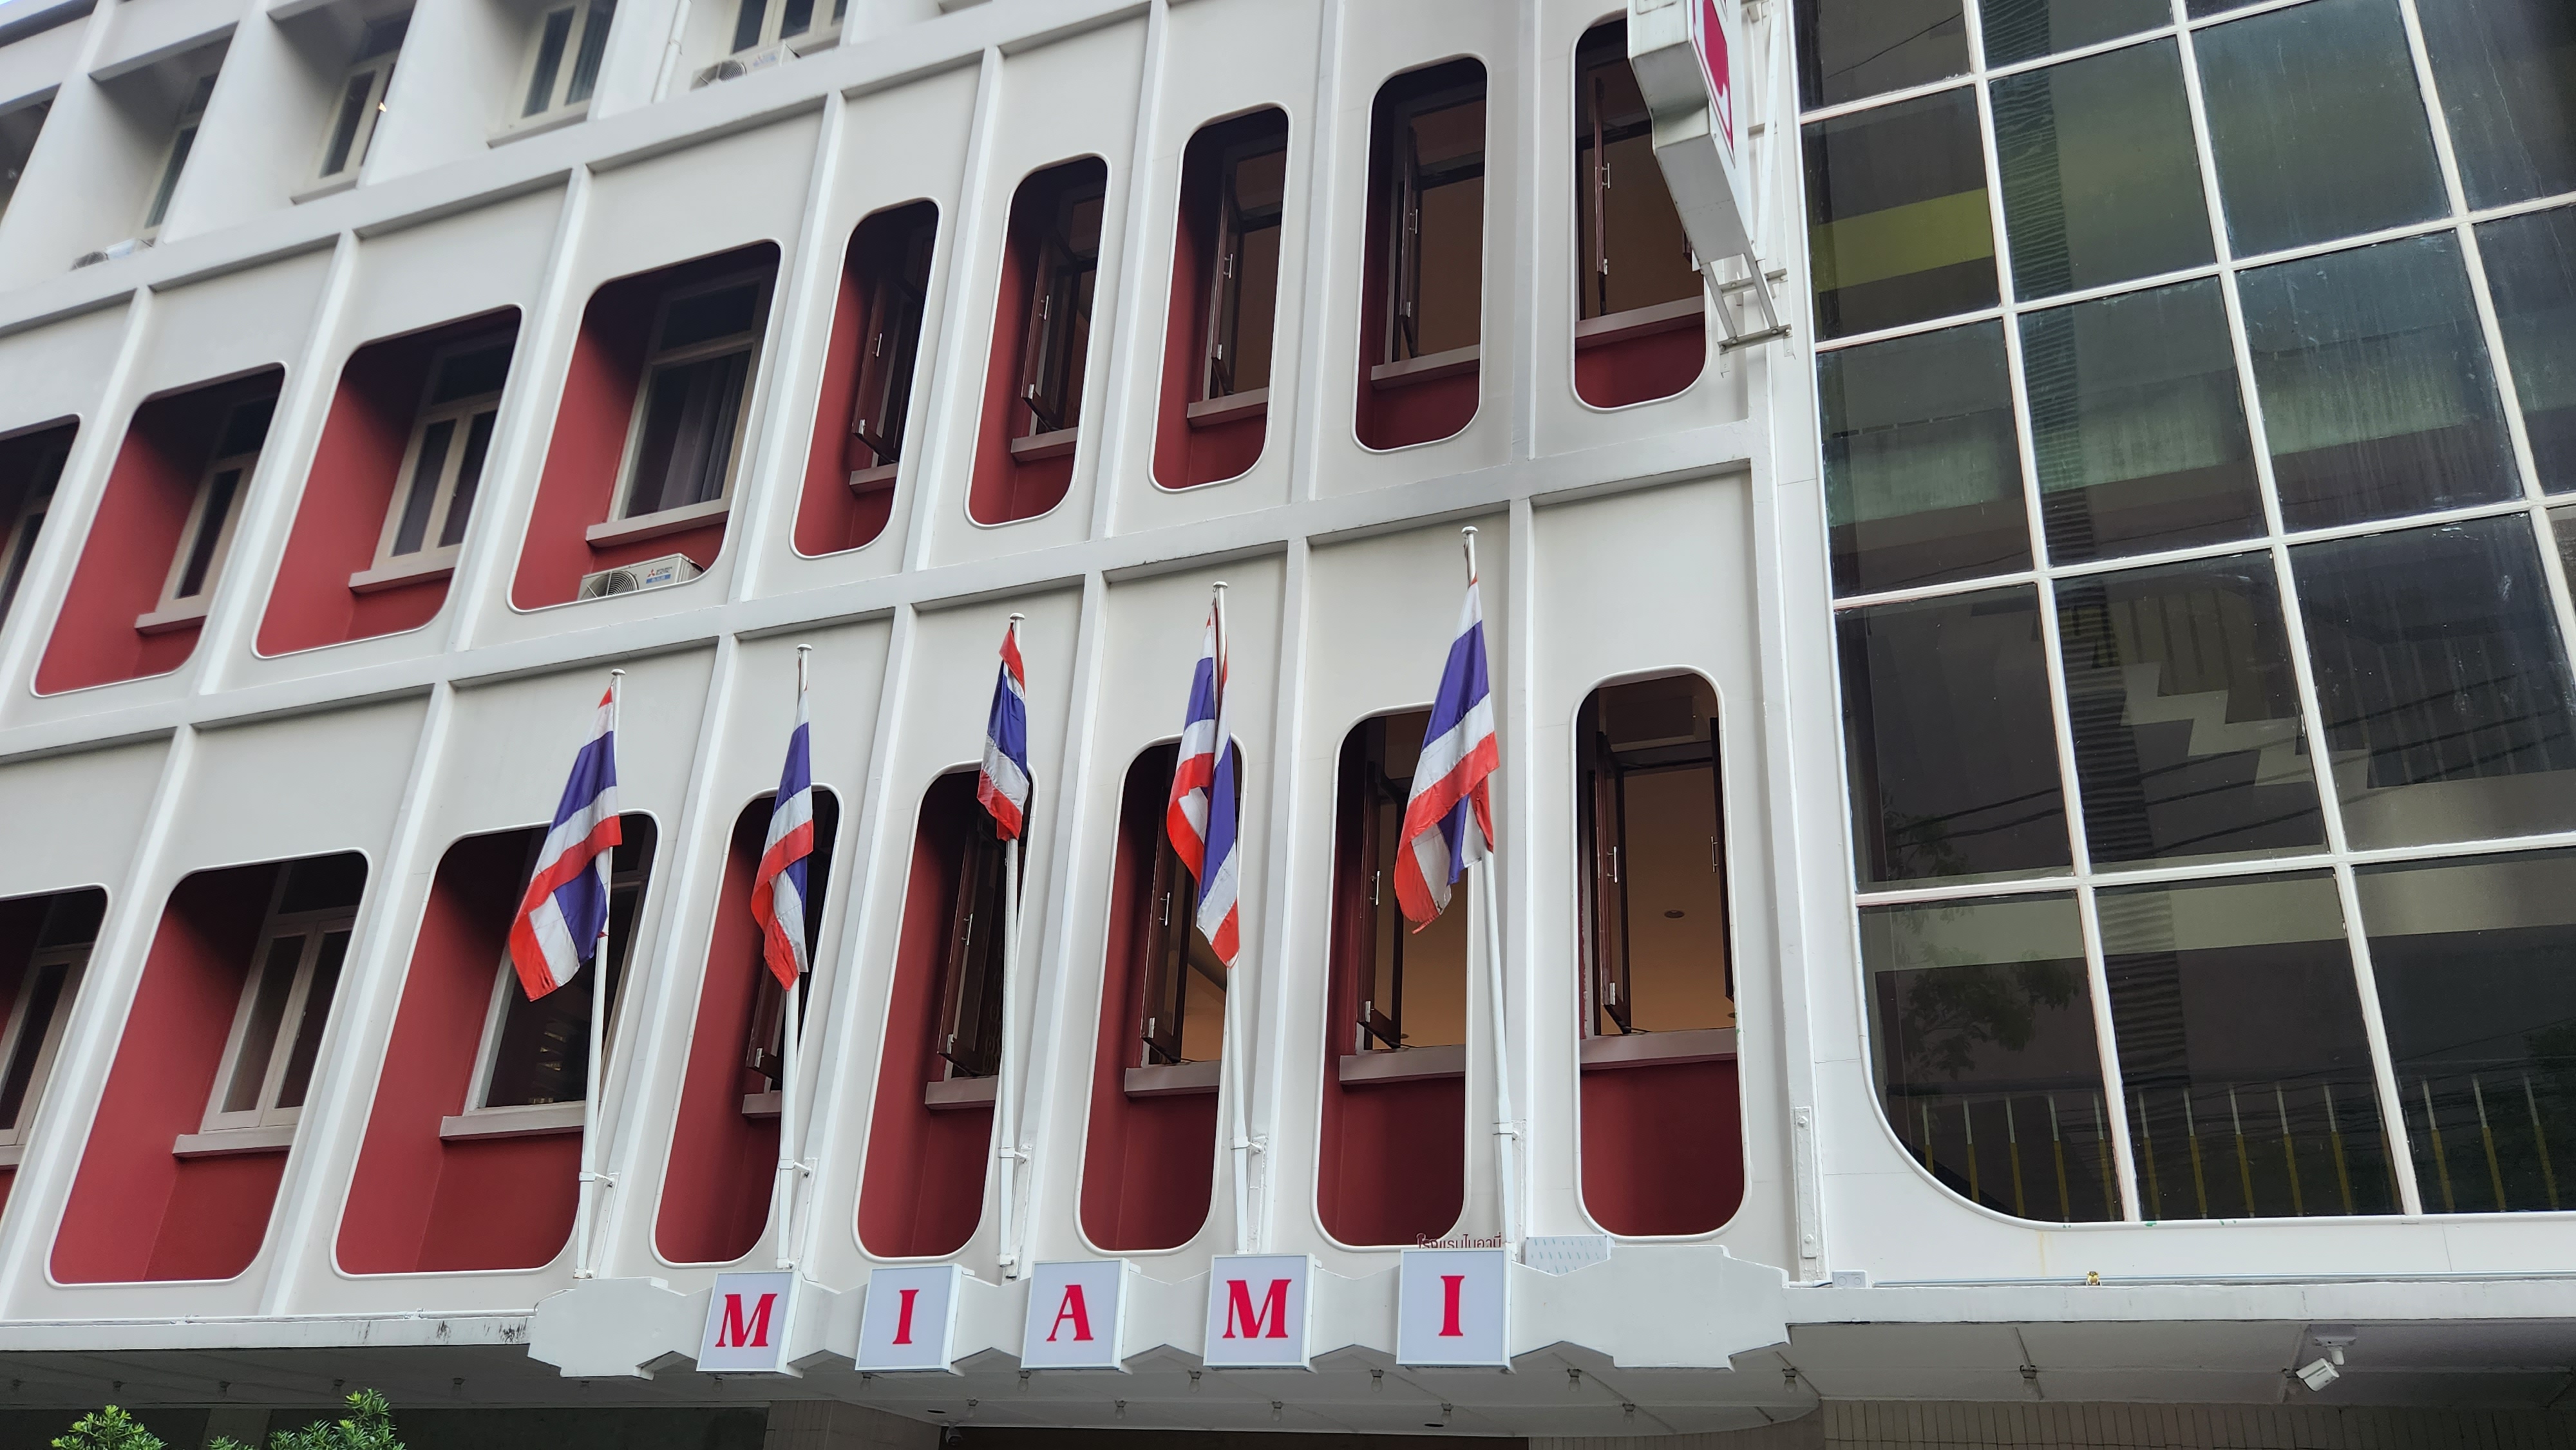 Miami Hotel | A new adorable old love in Bangkok